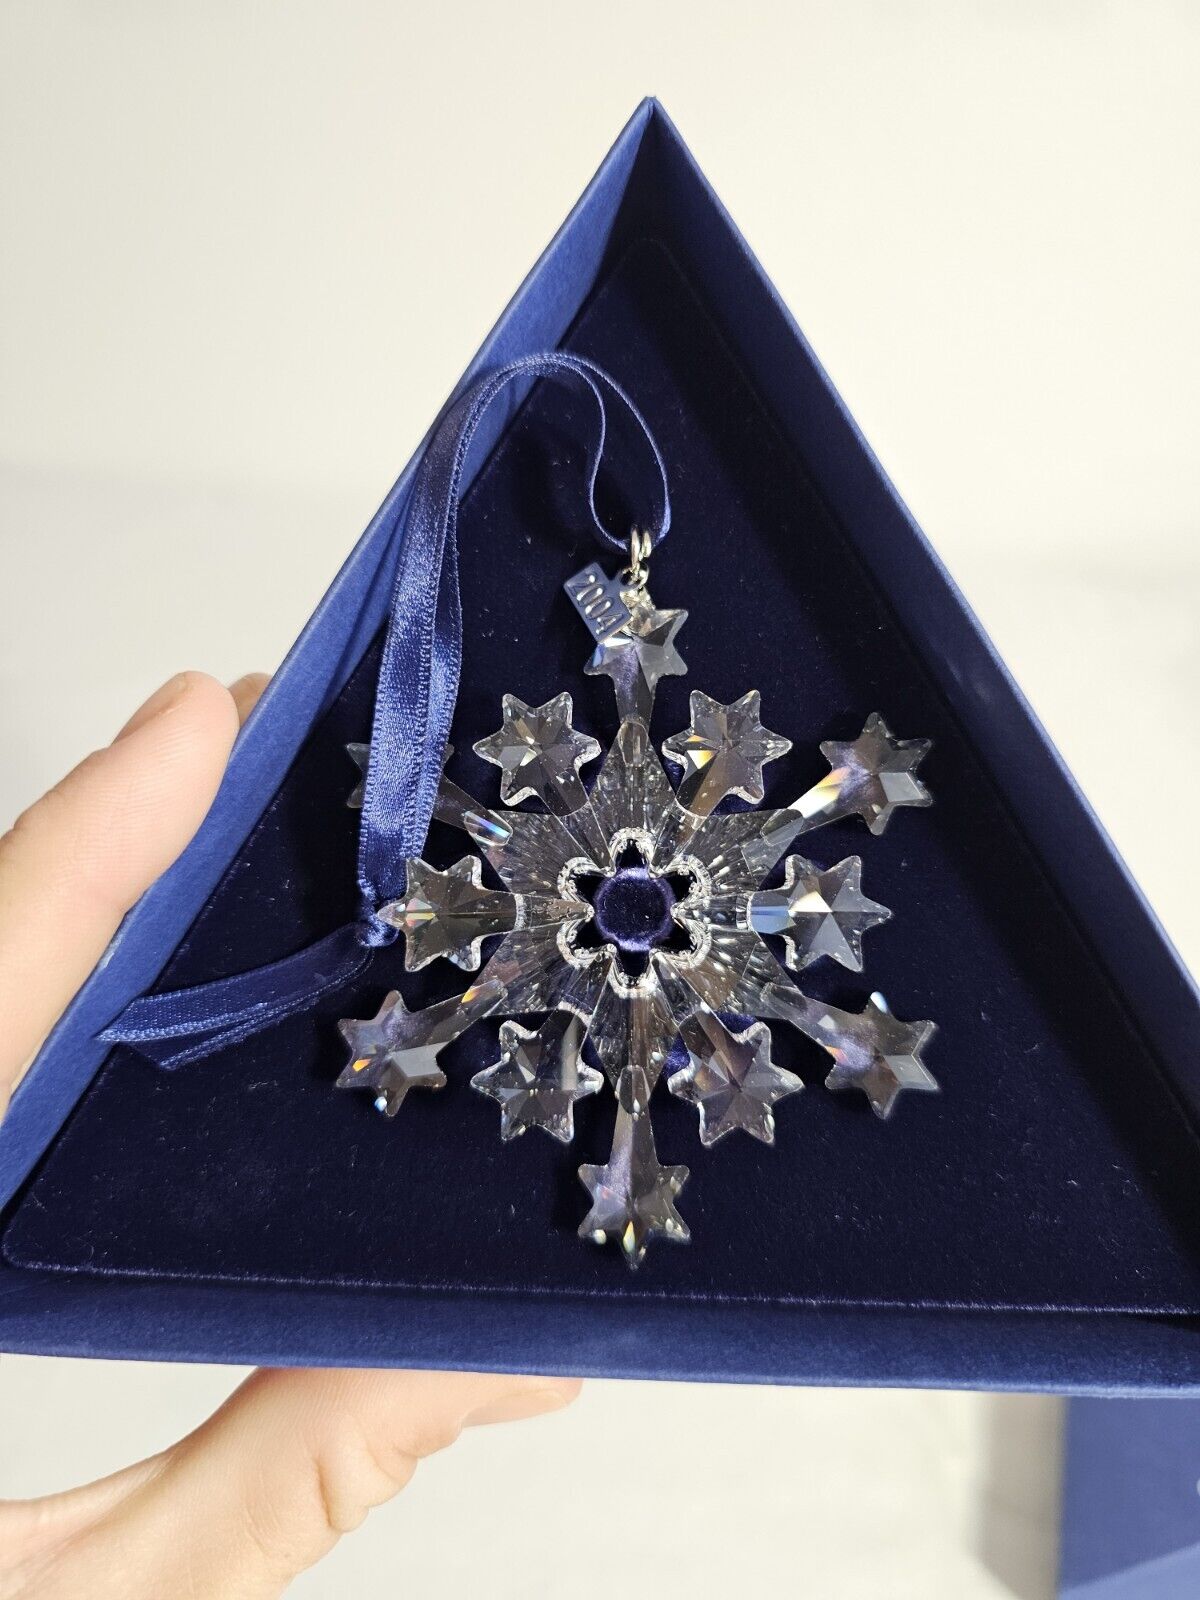 2004 Swarovski Silver Crystal Christmas Snowflake Ornament - Austria - In Box